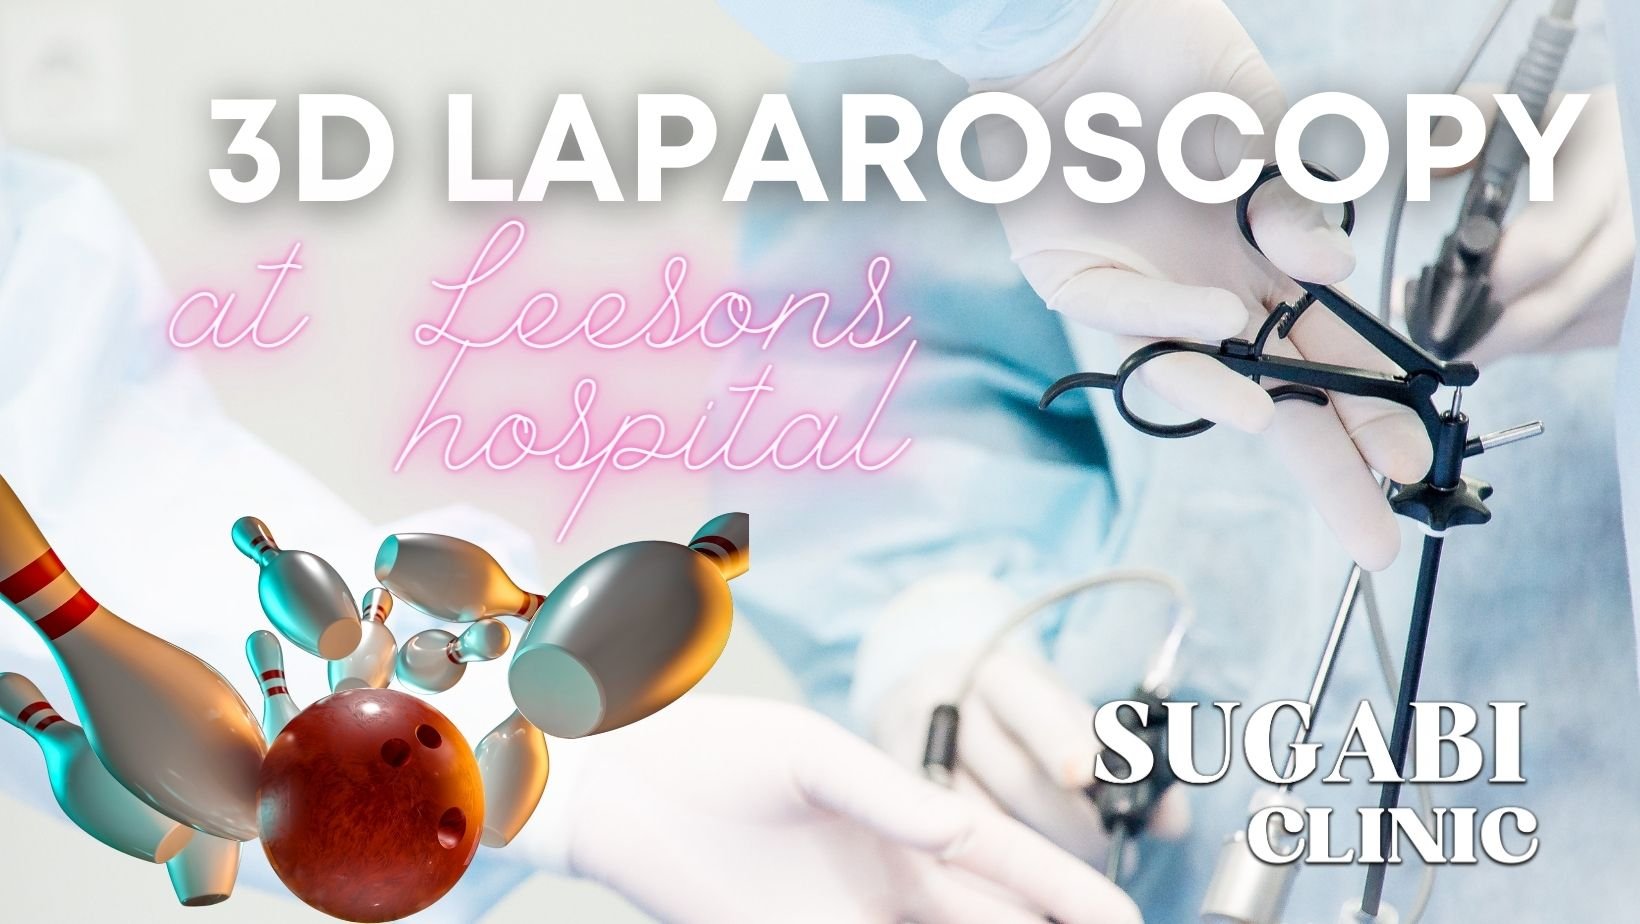 3d Laparoscopy Leesons